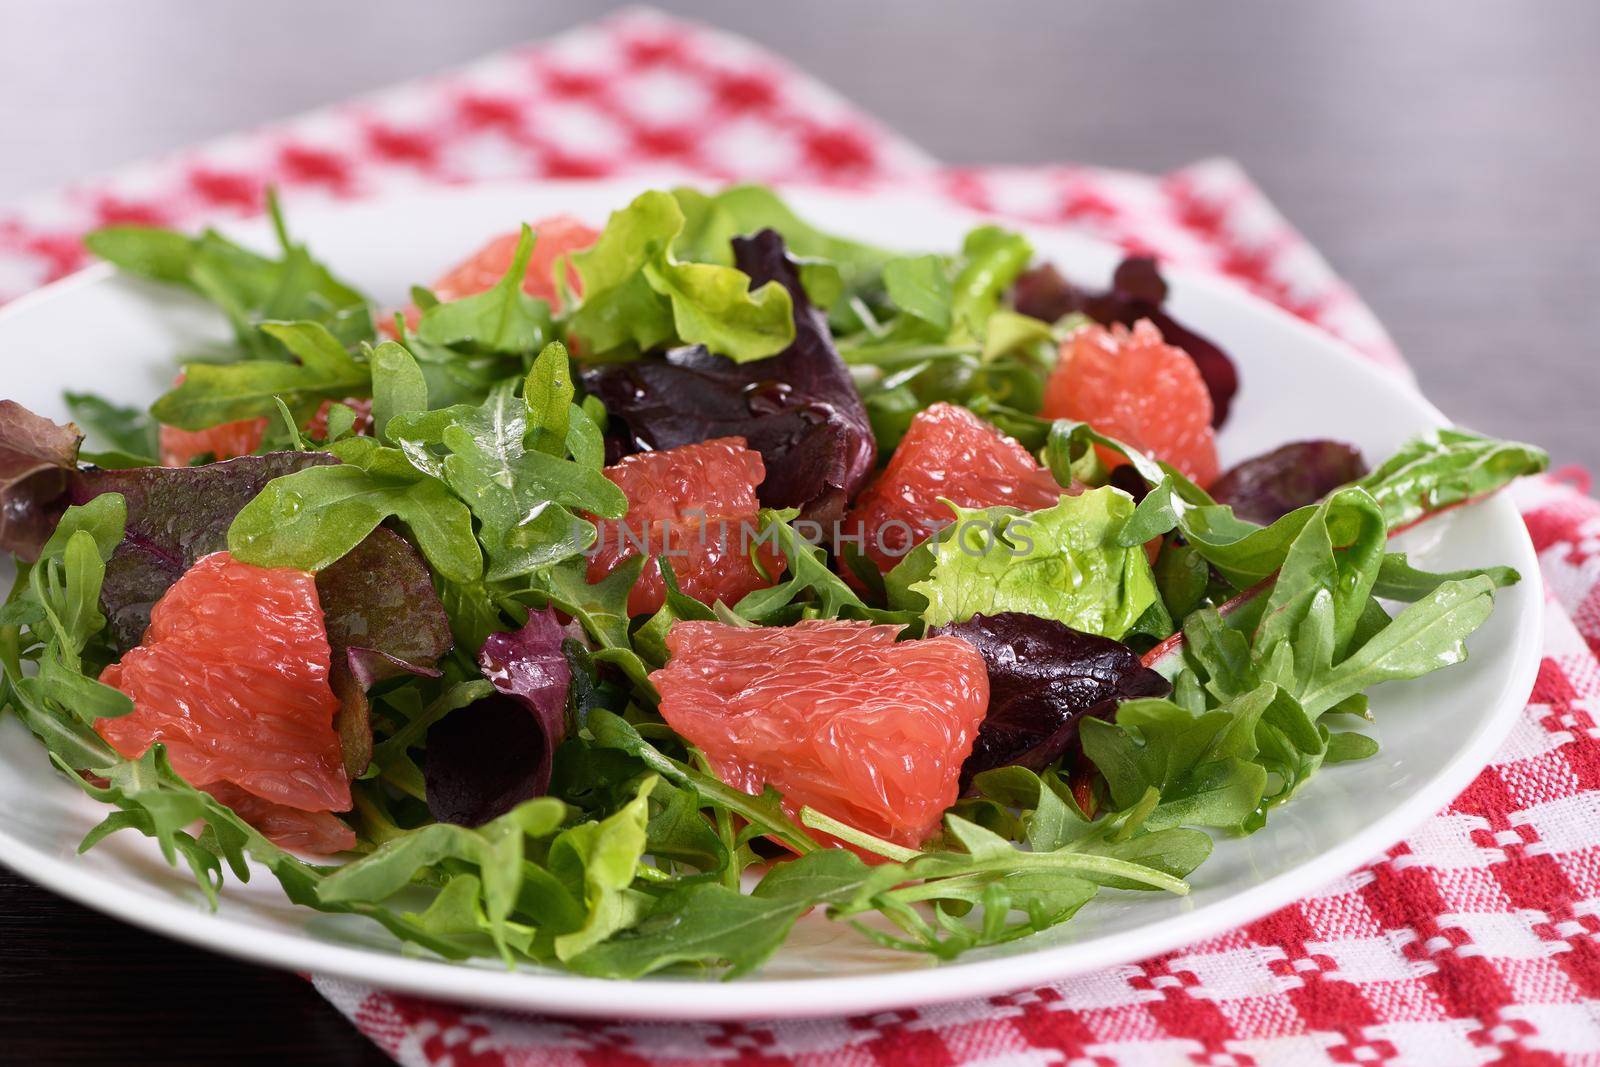 Grapefruit salad, a mix of lettuce, arugula and olive dressing. Dietary menu. Proper nutrition. Vegetarian food.